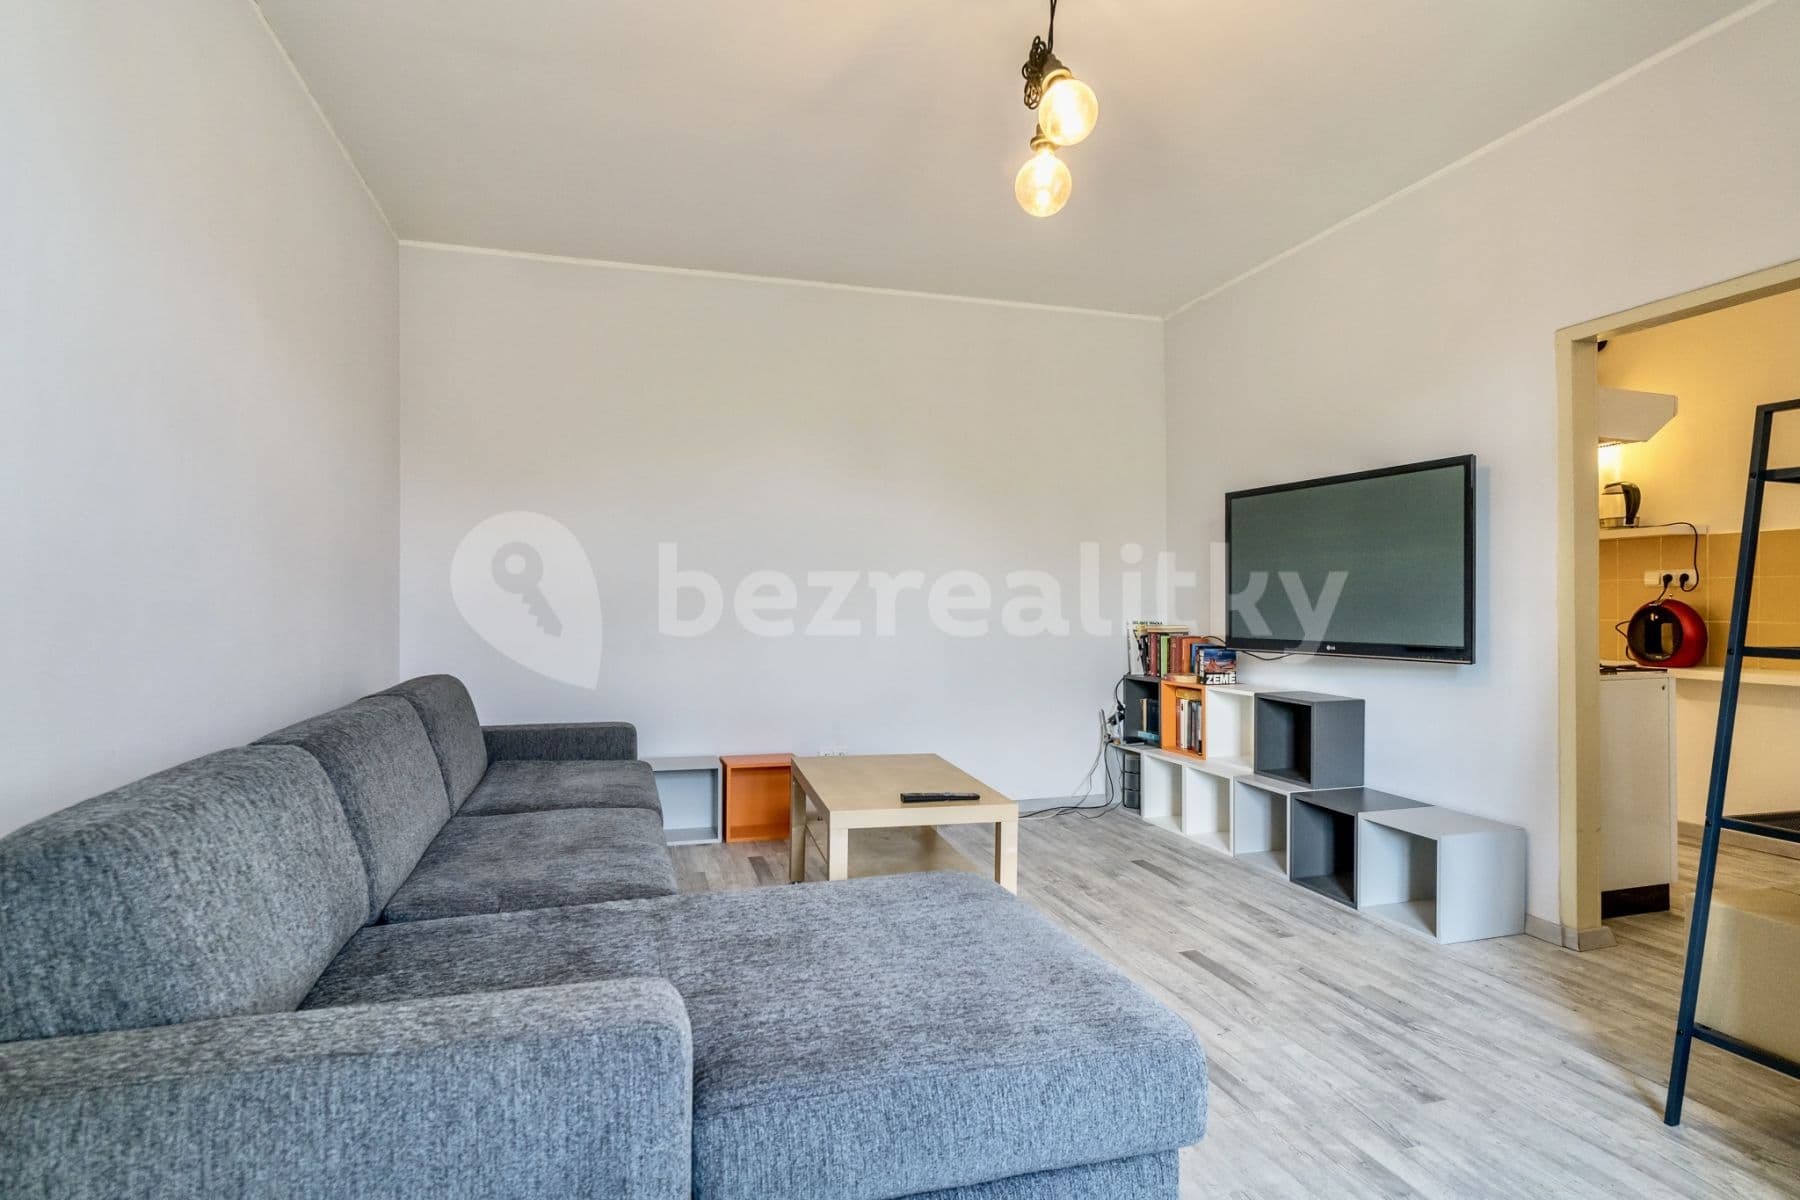 1 bedroom flat for sale, 34 m², Stroupežnického, Ústí nad Labem, Ústecký Region